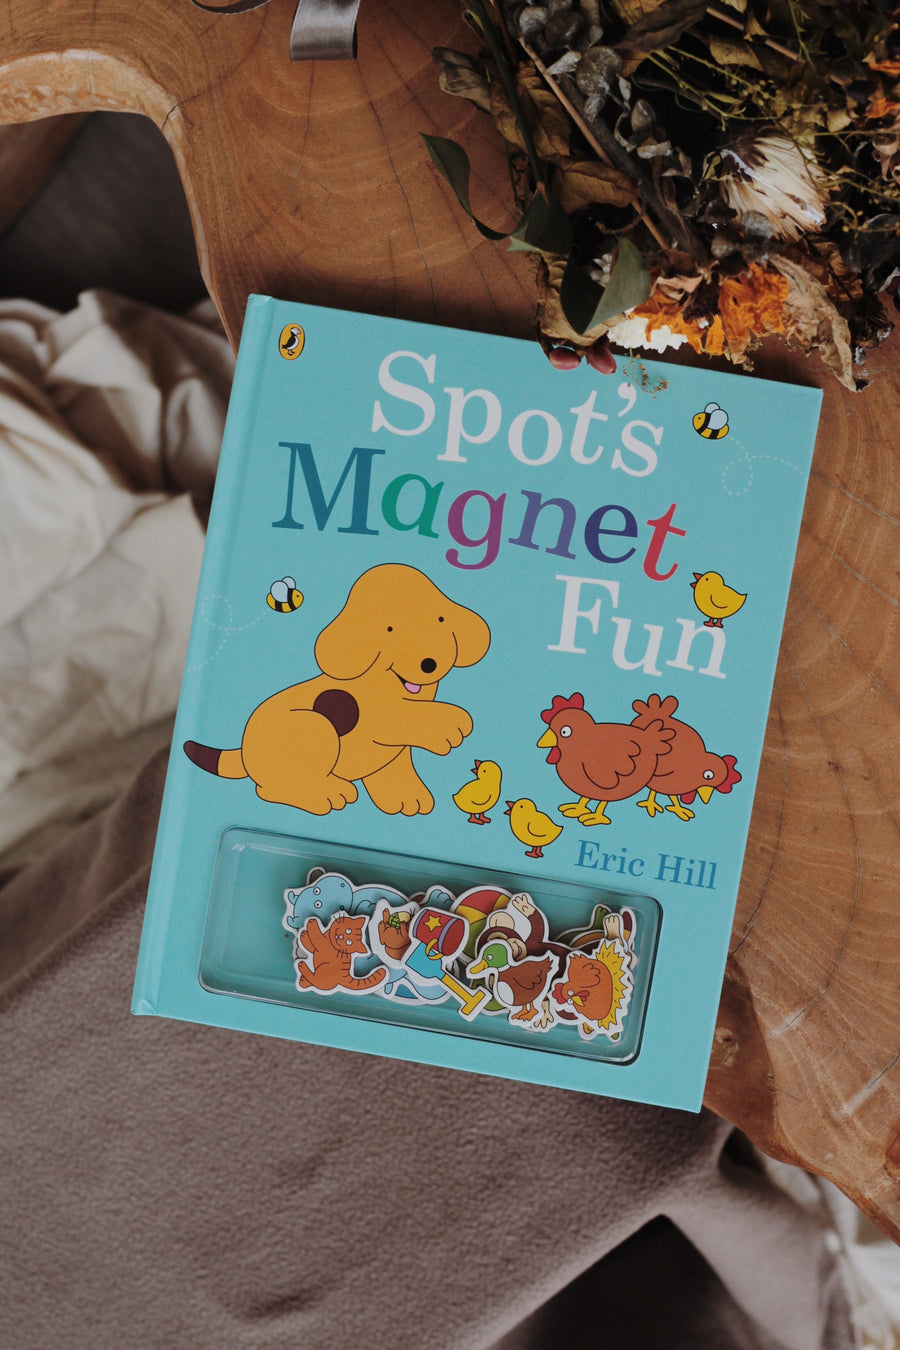 Spot's Magnet Fun